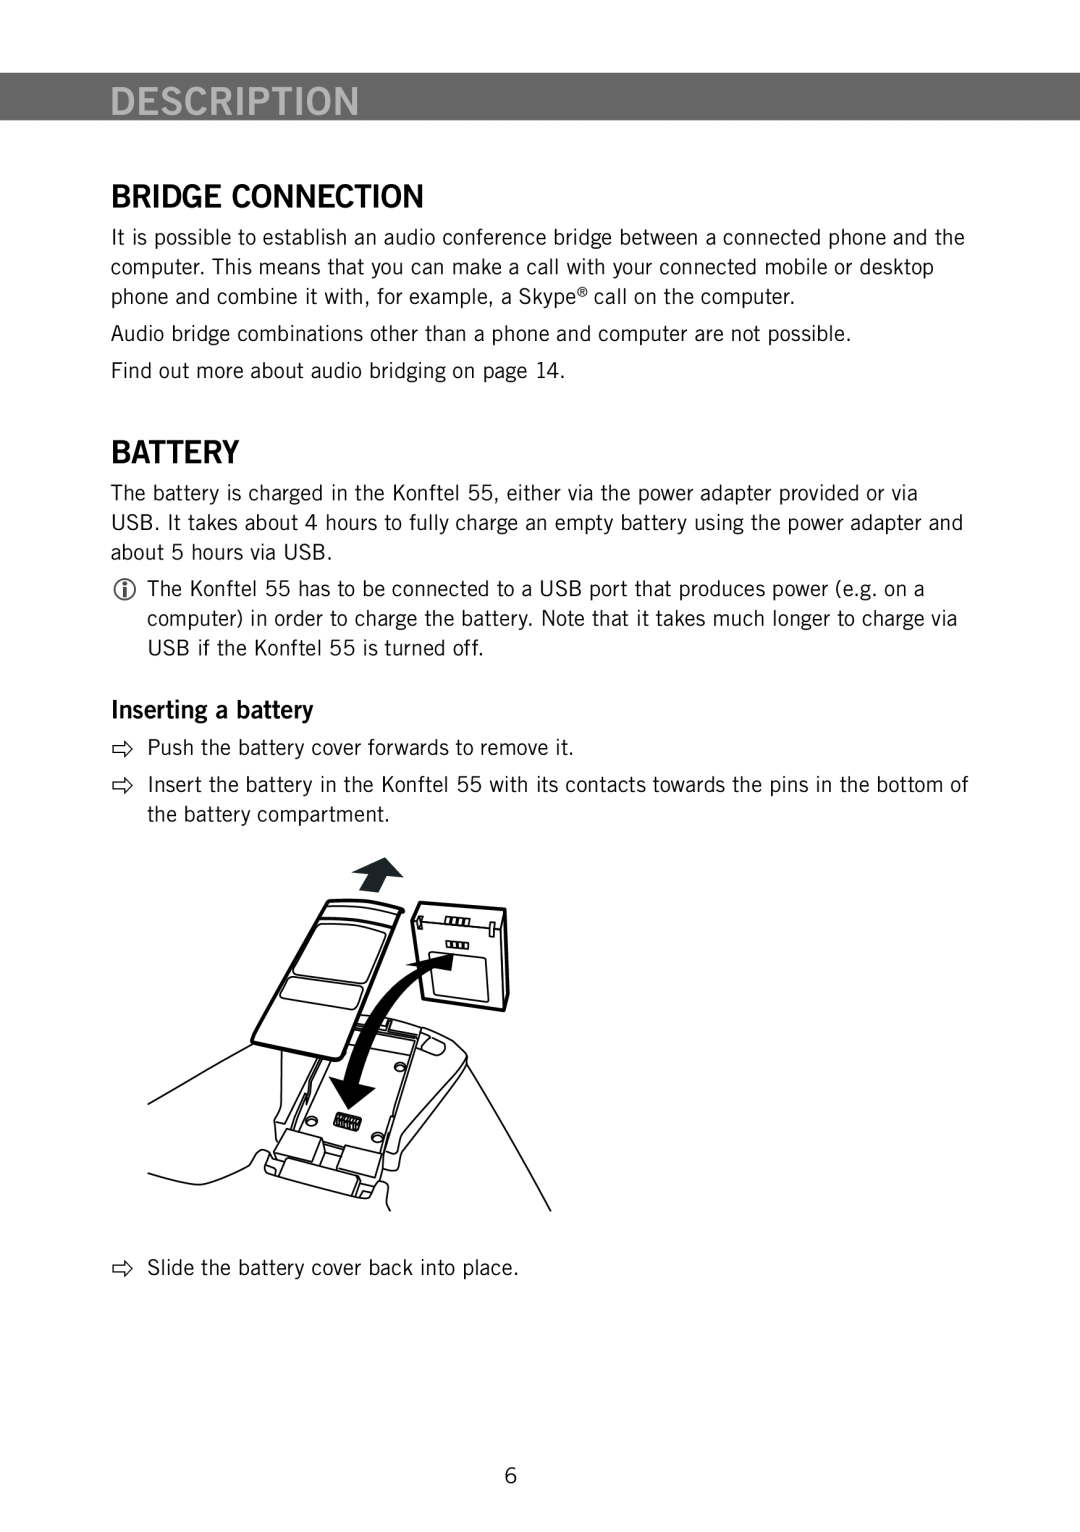 Konftel 55 manual Bridge Connection, Battery, Inserting a battery, Description 